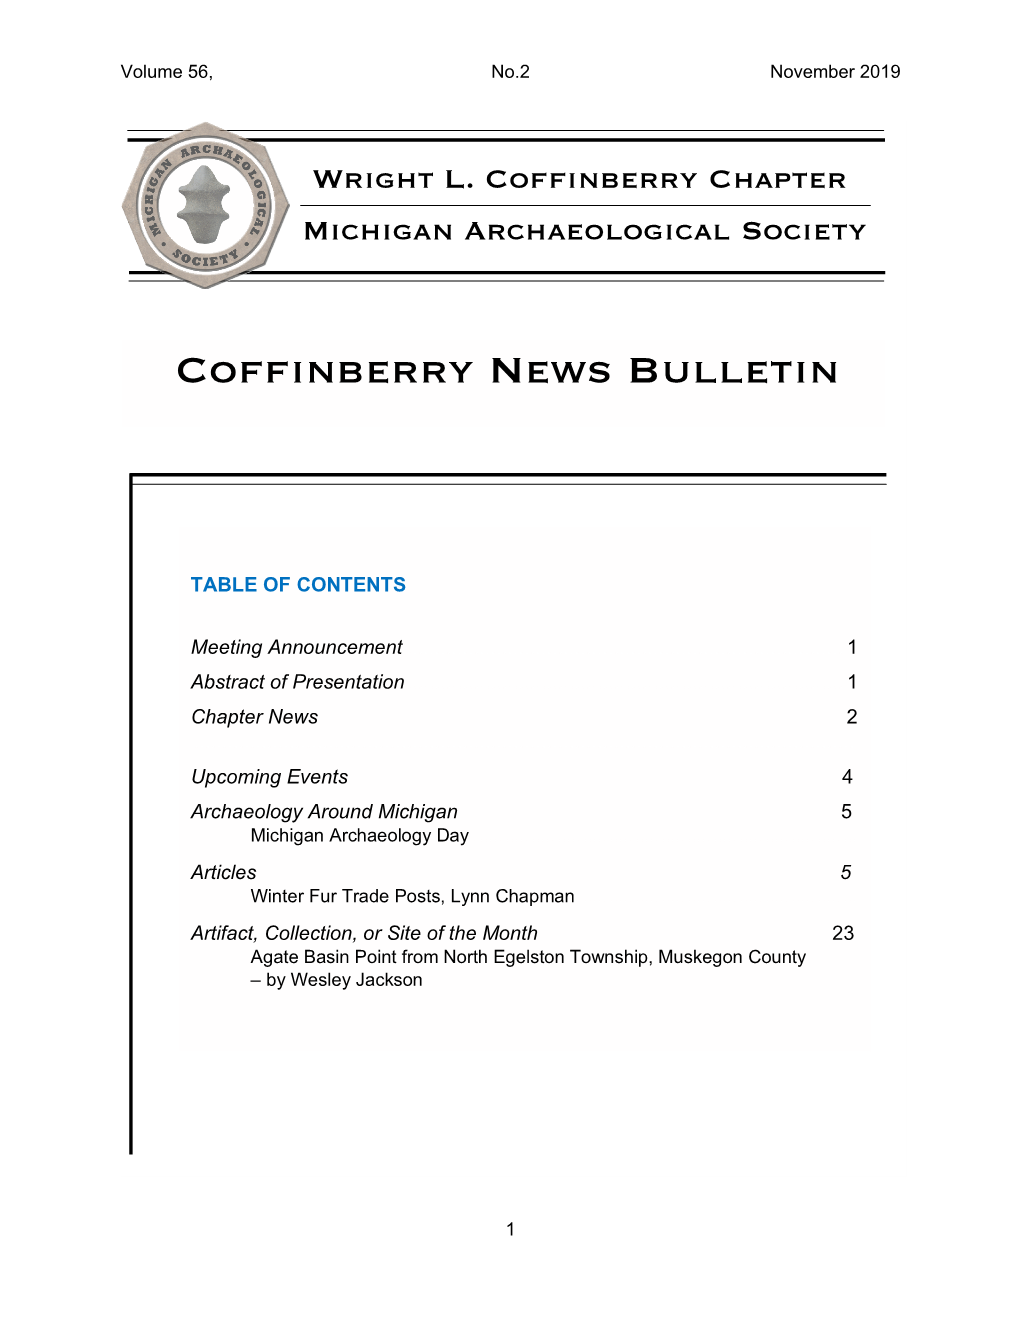 Coffinberry News Bulletin